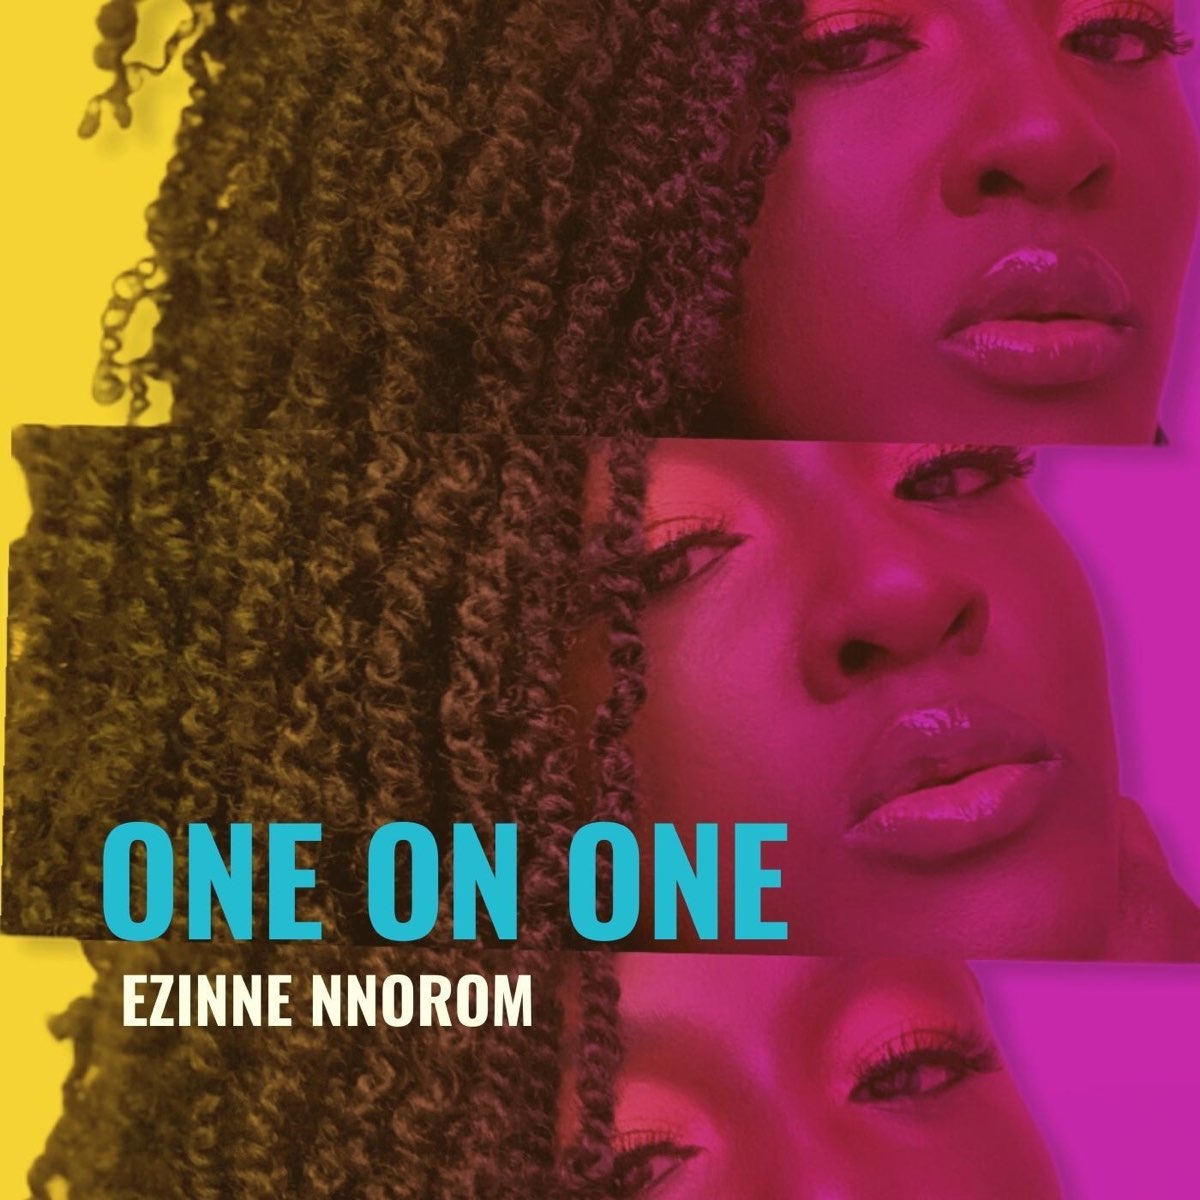 One on One - Single - Album by Ezinne Nnorom - Apple Music